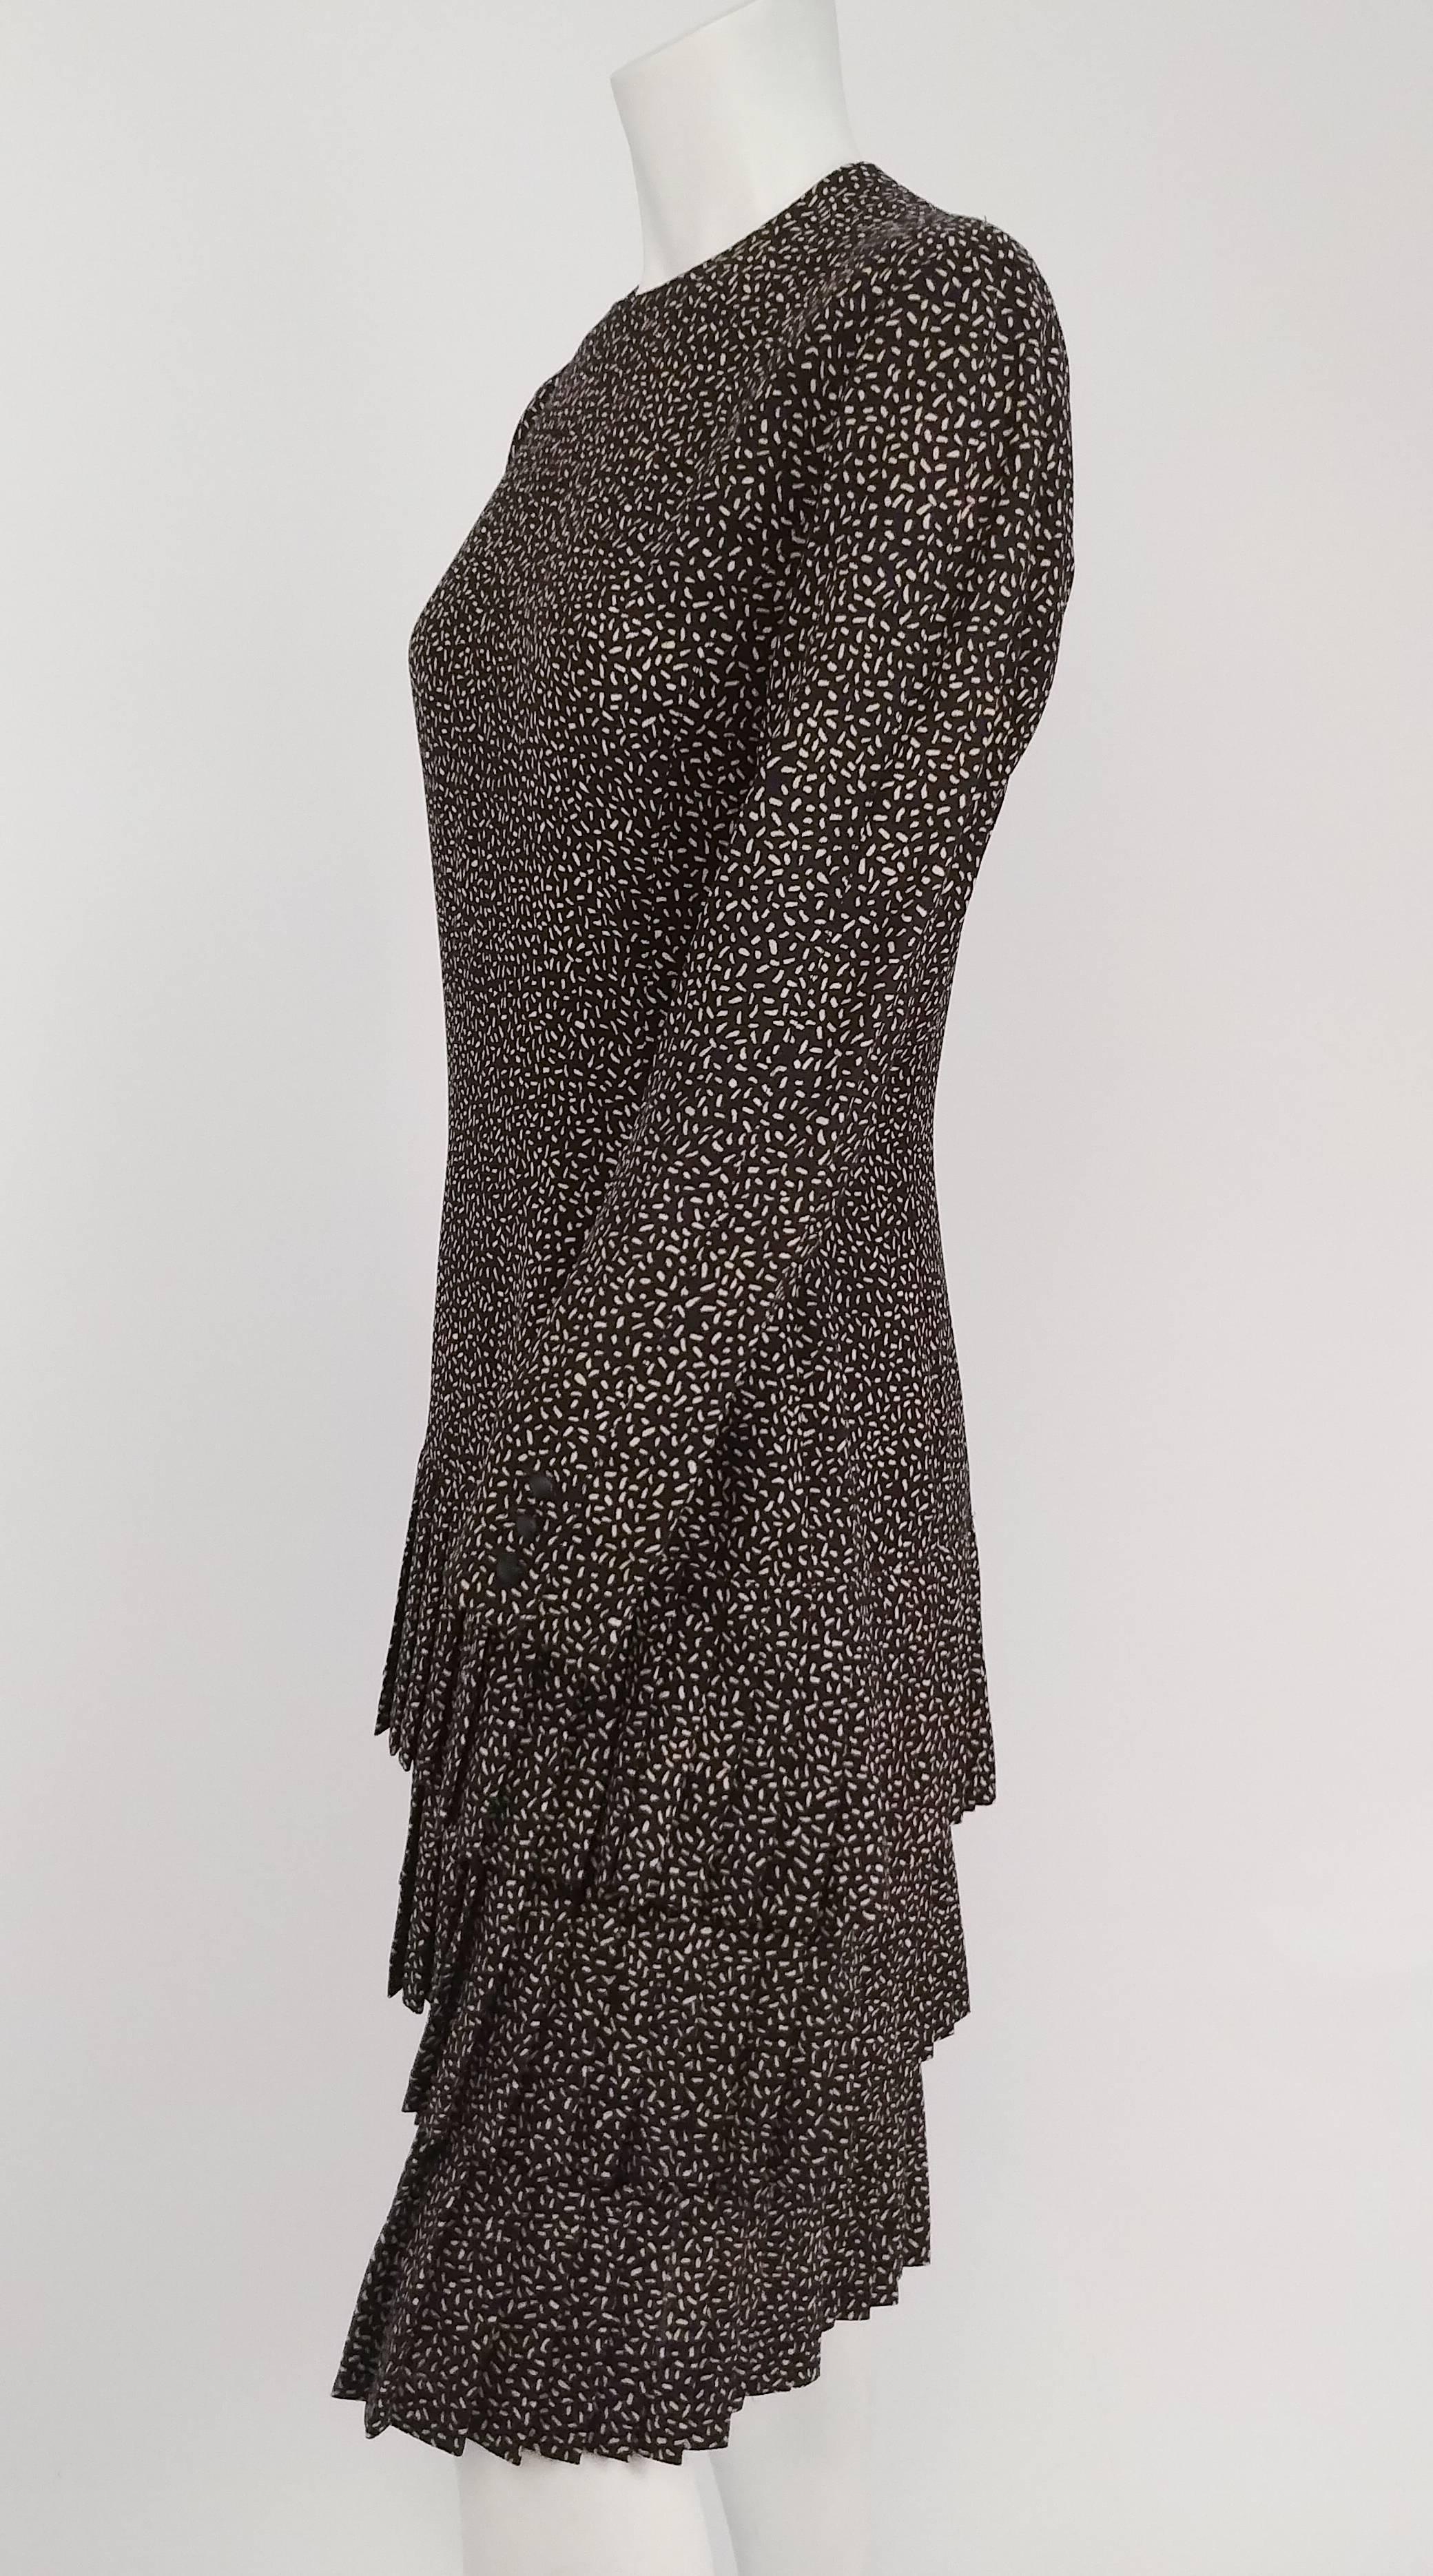 1980s Escada Drop Waist Pleated Dress. Wool blend fabric. Fully lined. 